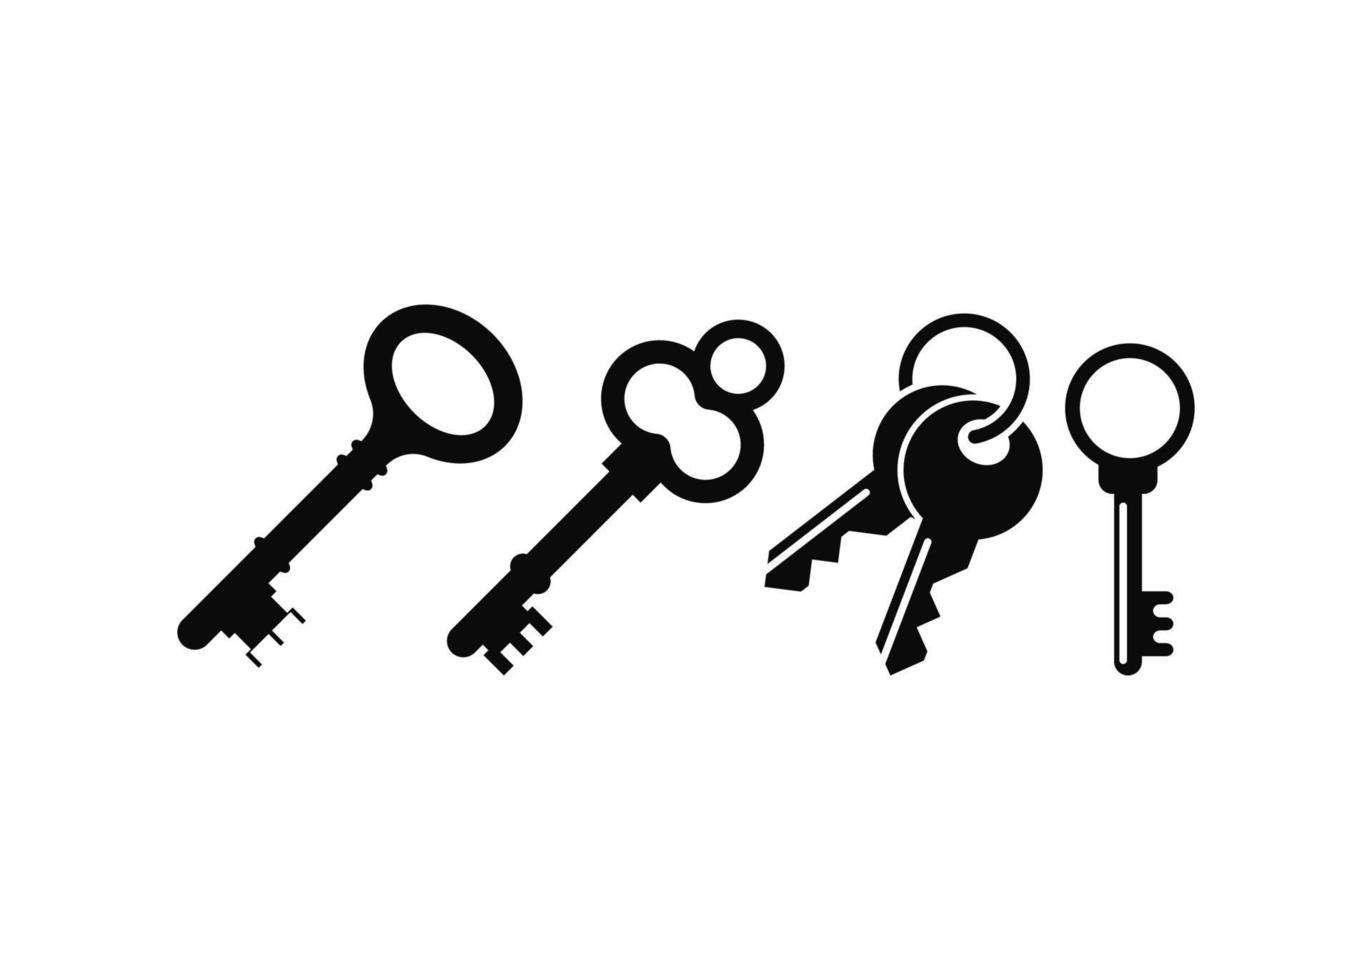 Keys icon set design template vector isolated illustration